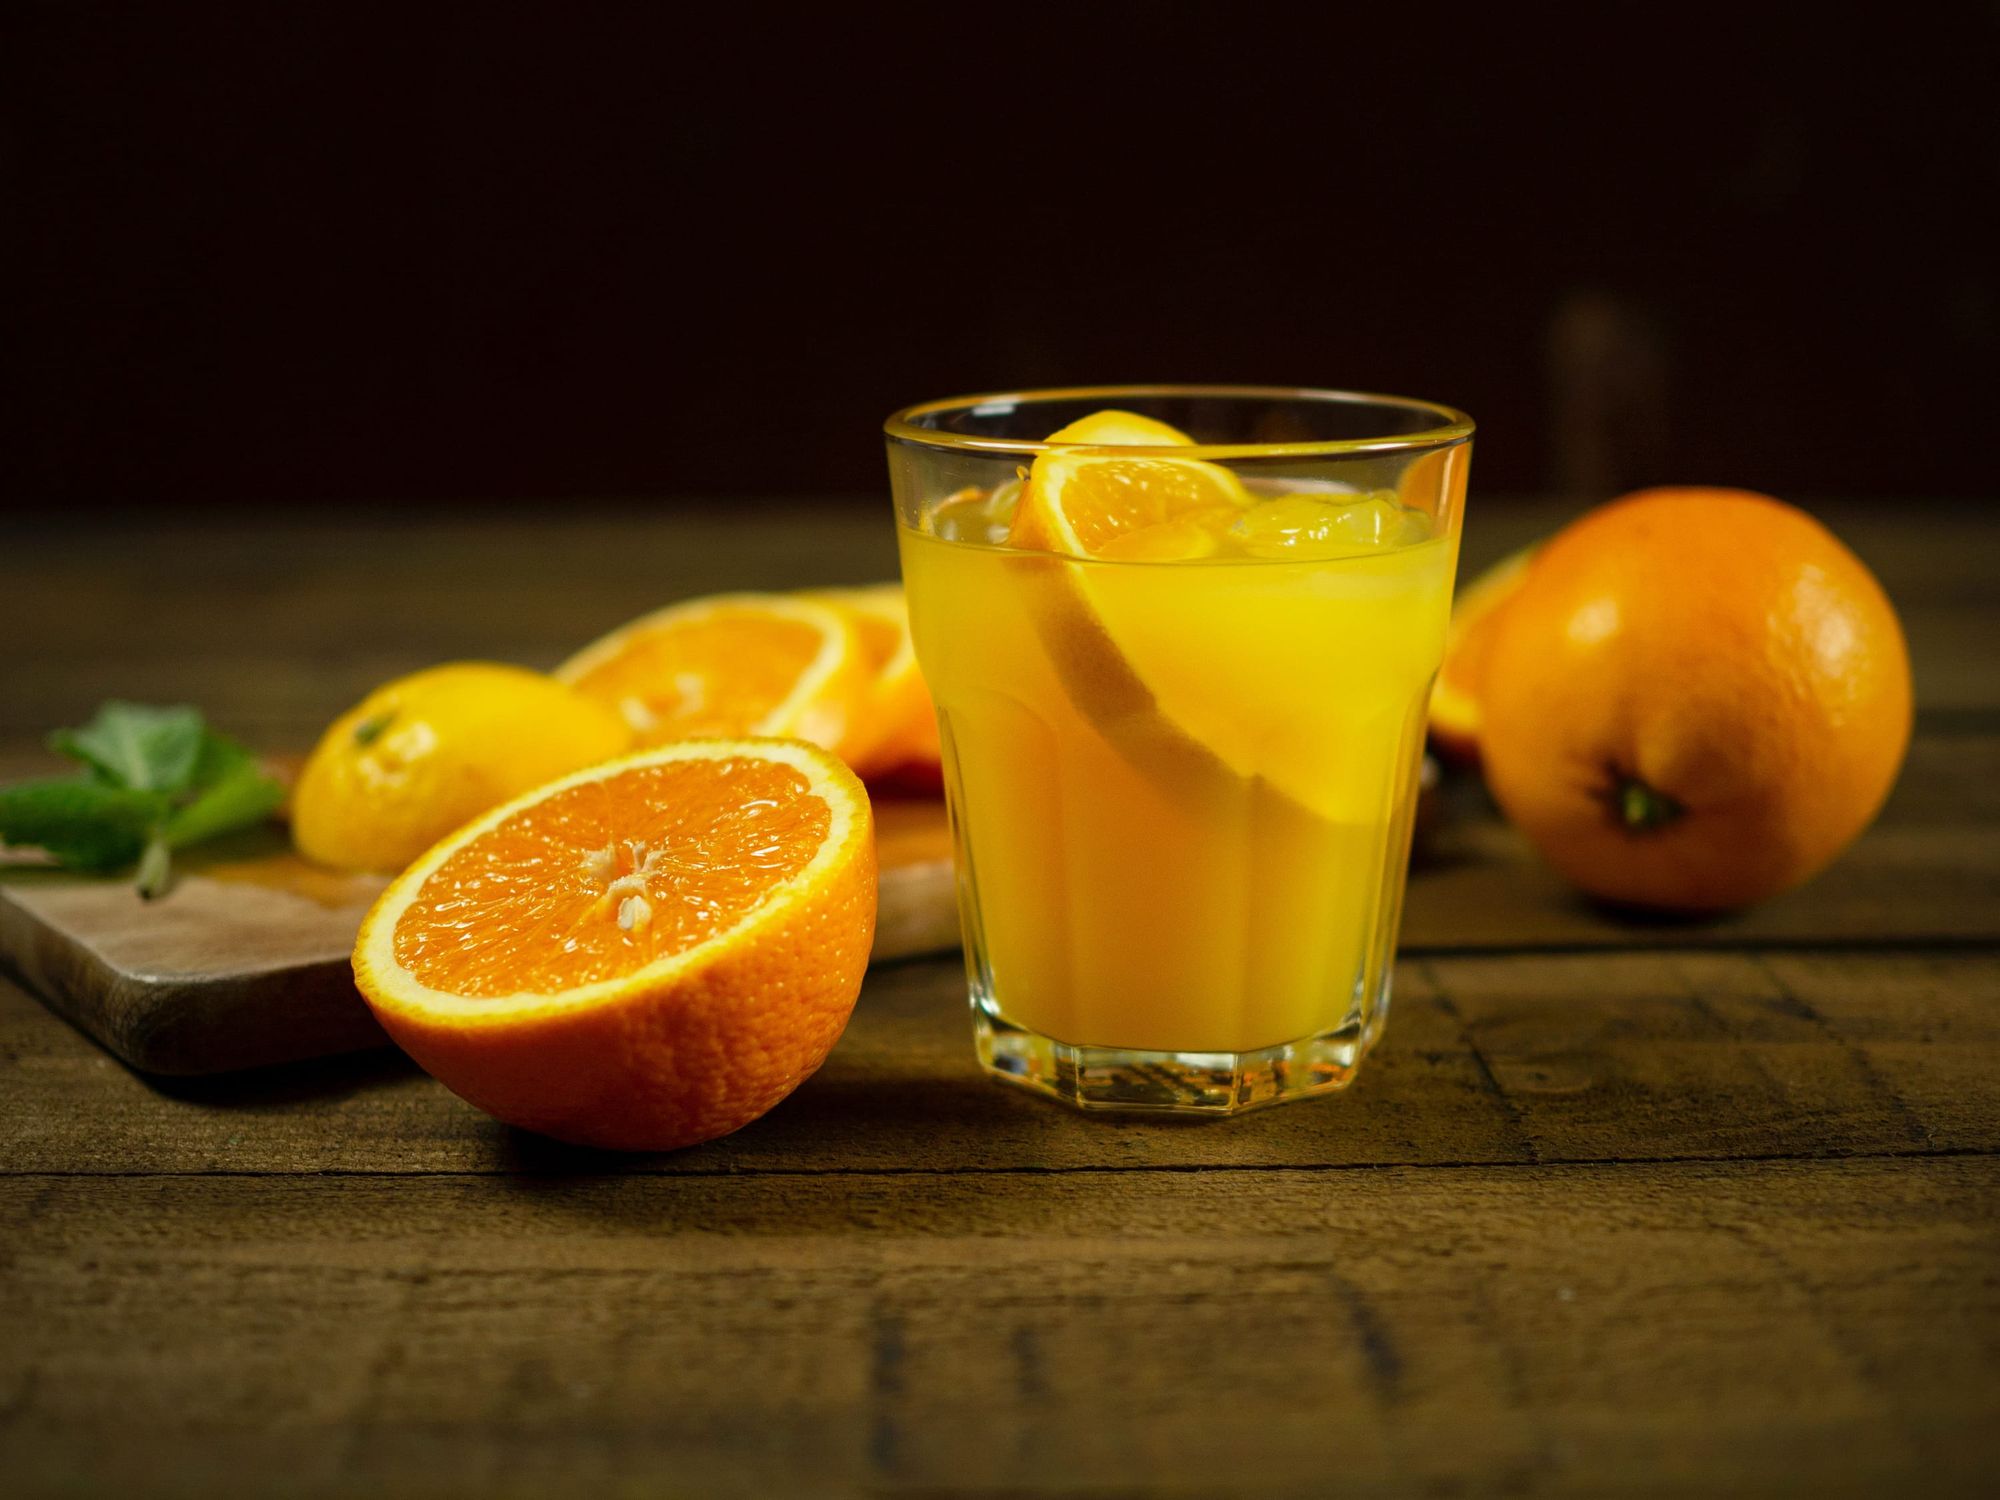 image of a glass of orange juice near a sliced orange